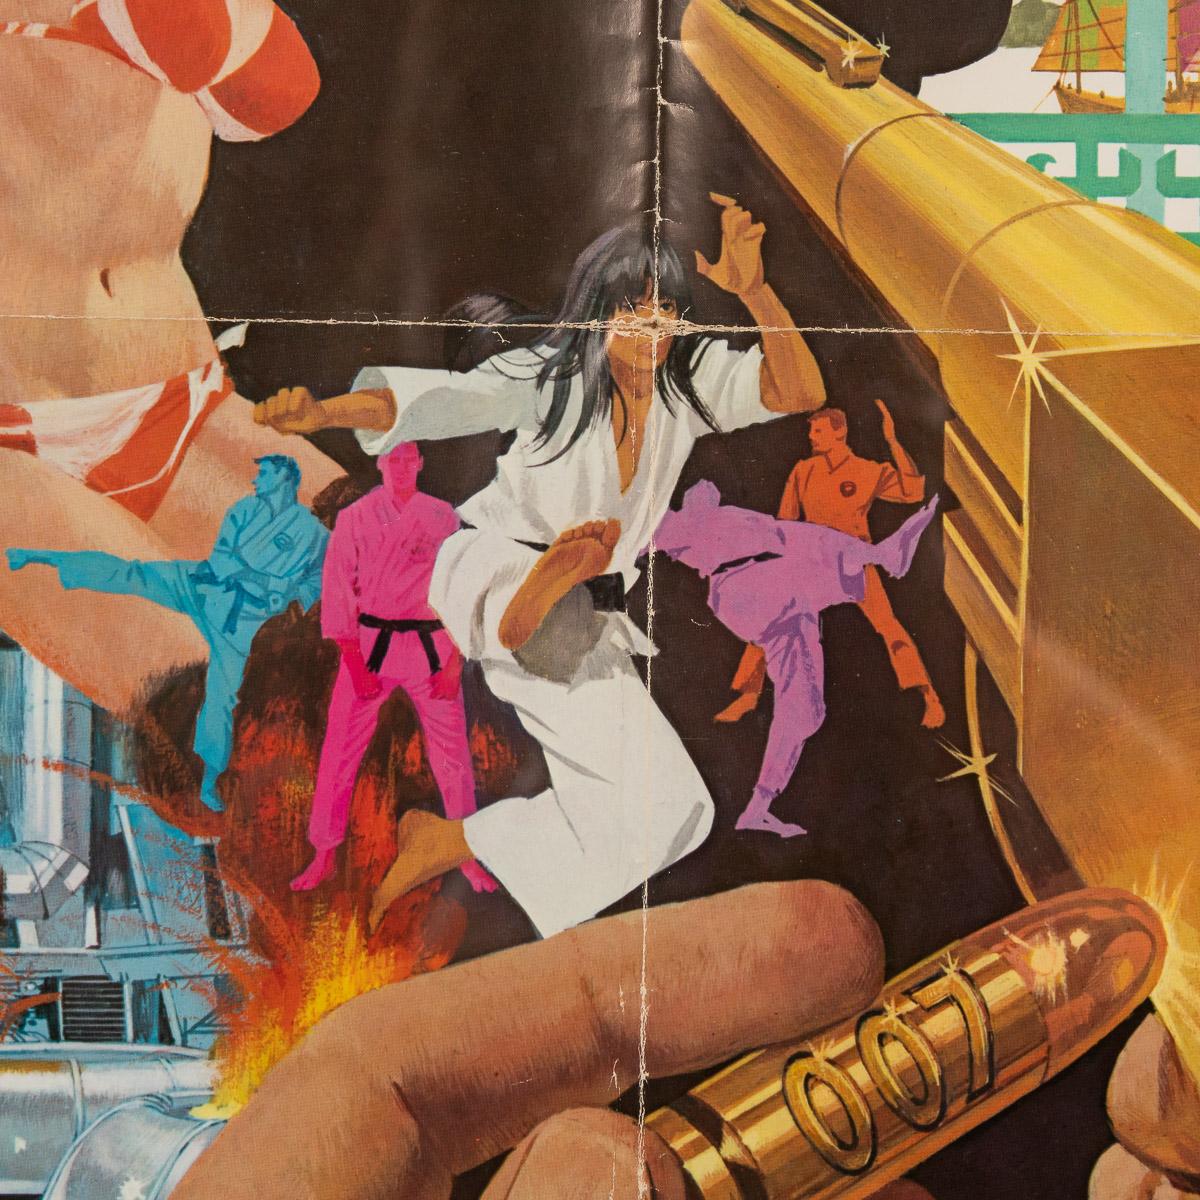 Original American Release James Bond 'Man With The Golden Gun' Poster, c.1974 4